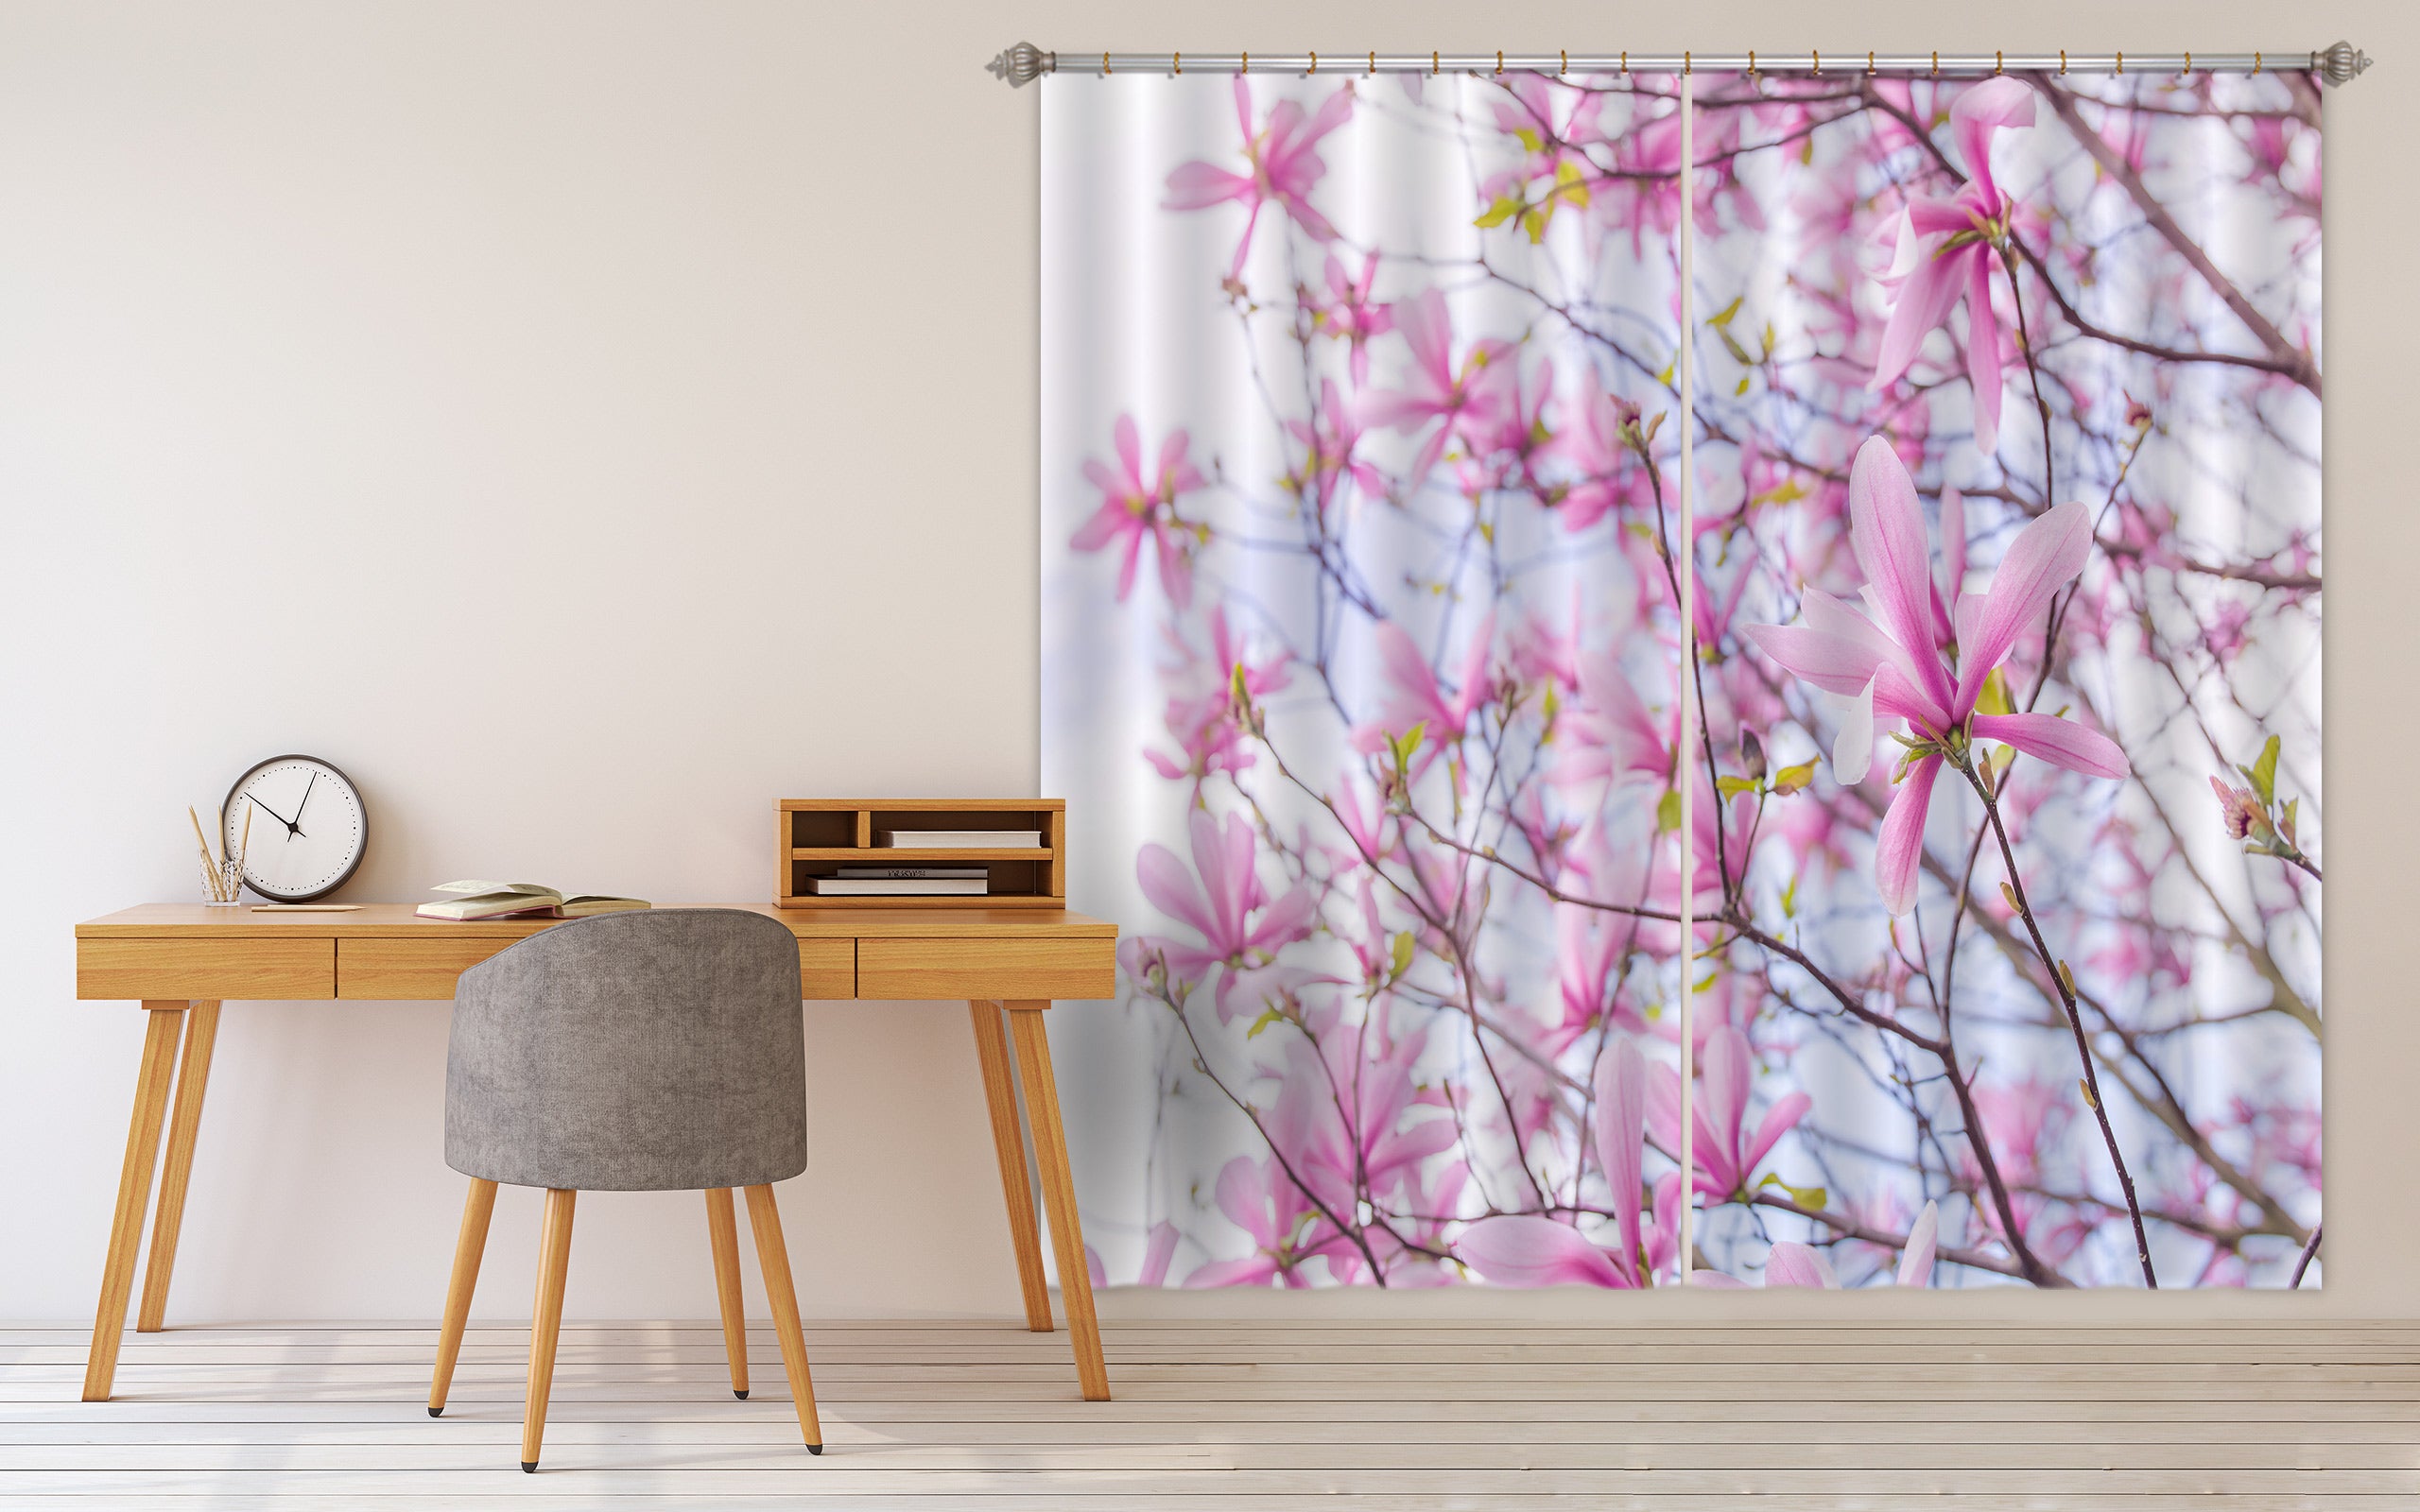 3D Flower Branch 6543 Assaf Frank Curtain Curtains Drapes